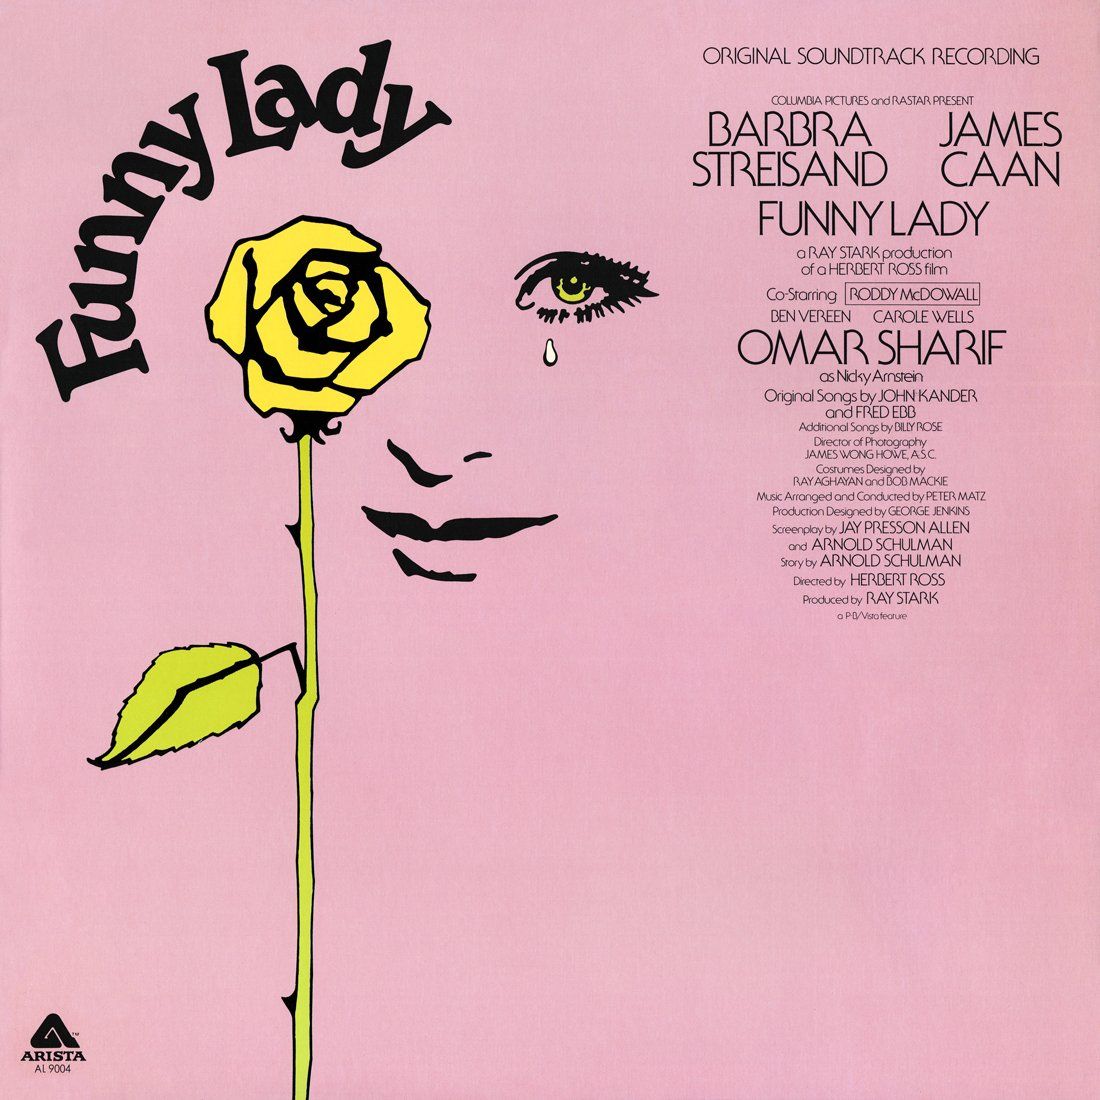 Funny Lady soundtrack original album cover. Scan by Kevin Schlenker.